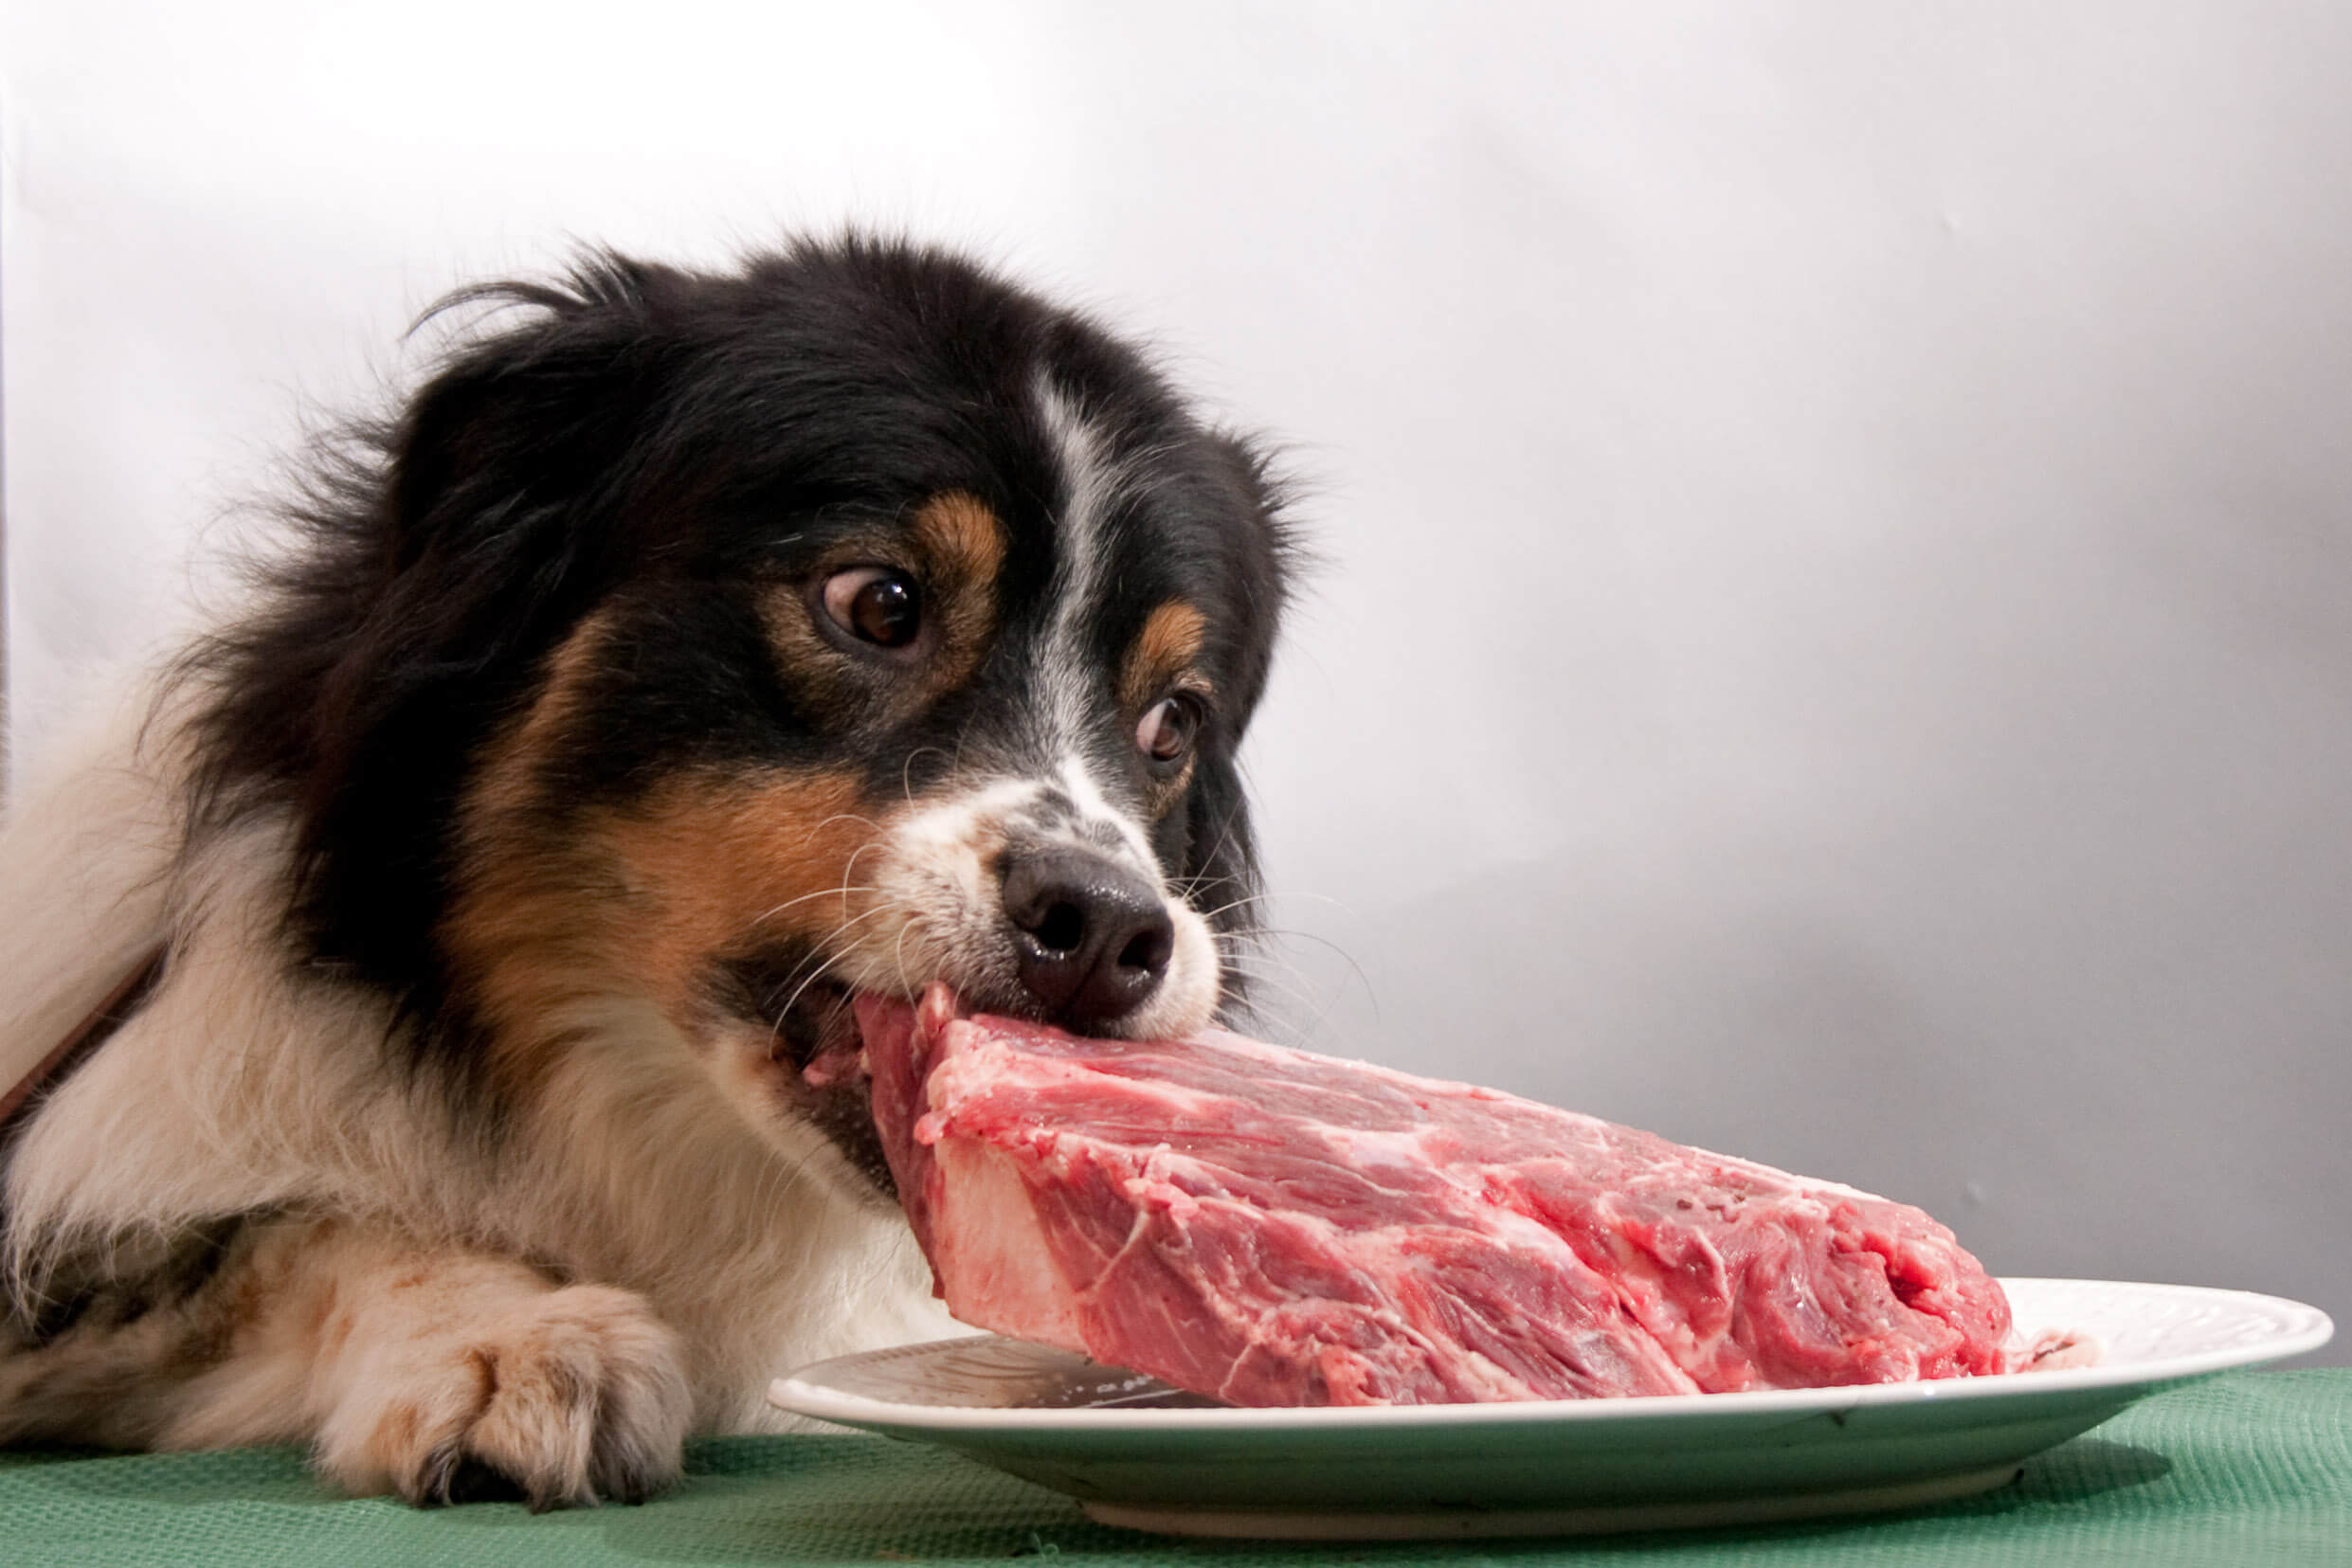 a dog taking a steak off a plate